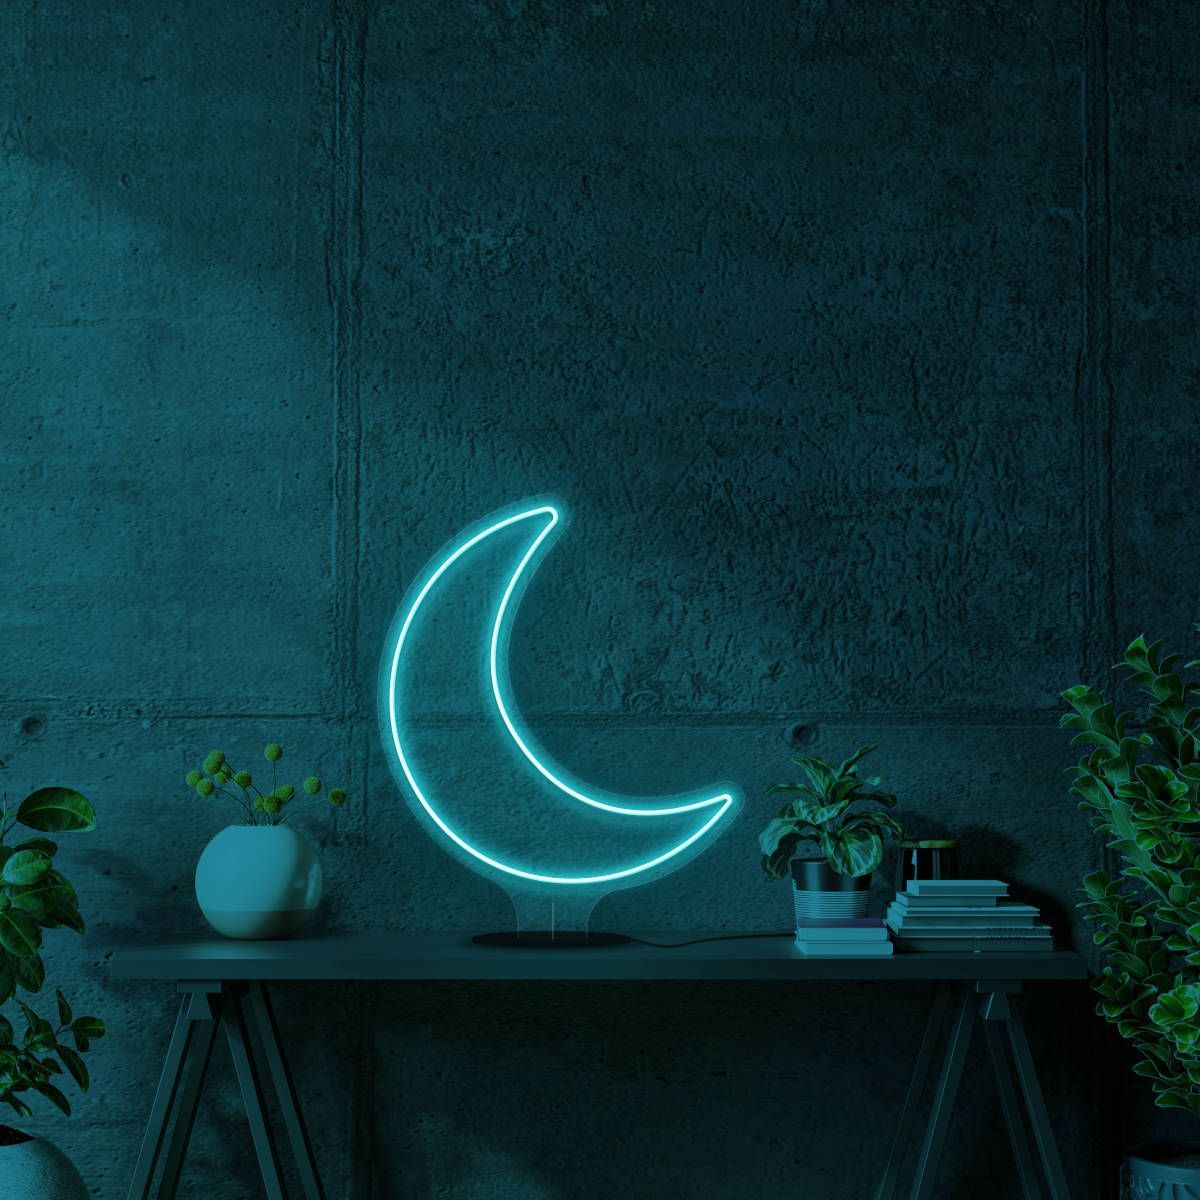 A moon neon sign on a table in a dark room - Aqua